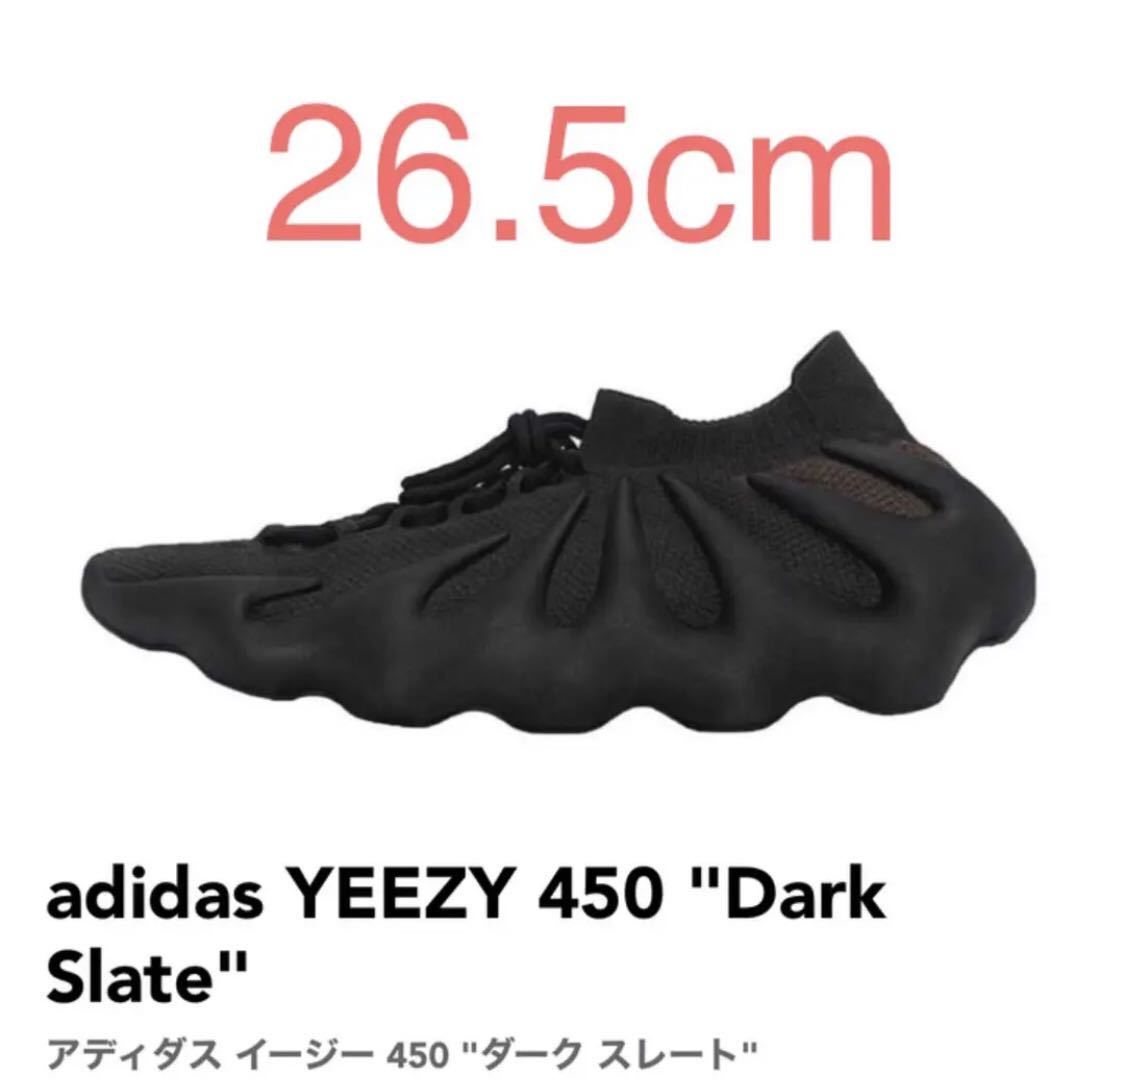 adidas YEEZY 450 Dark Slate アディダス イージー 450 ダーク スレート GY5368 26.5cm US8 新品 未使用